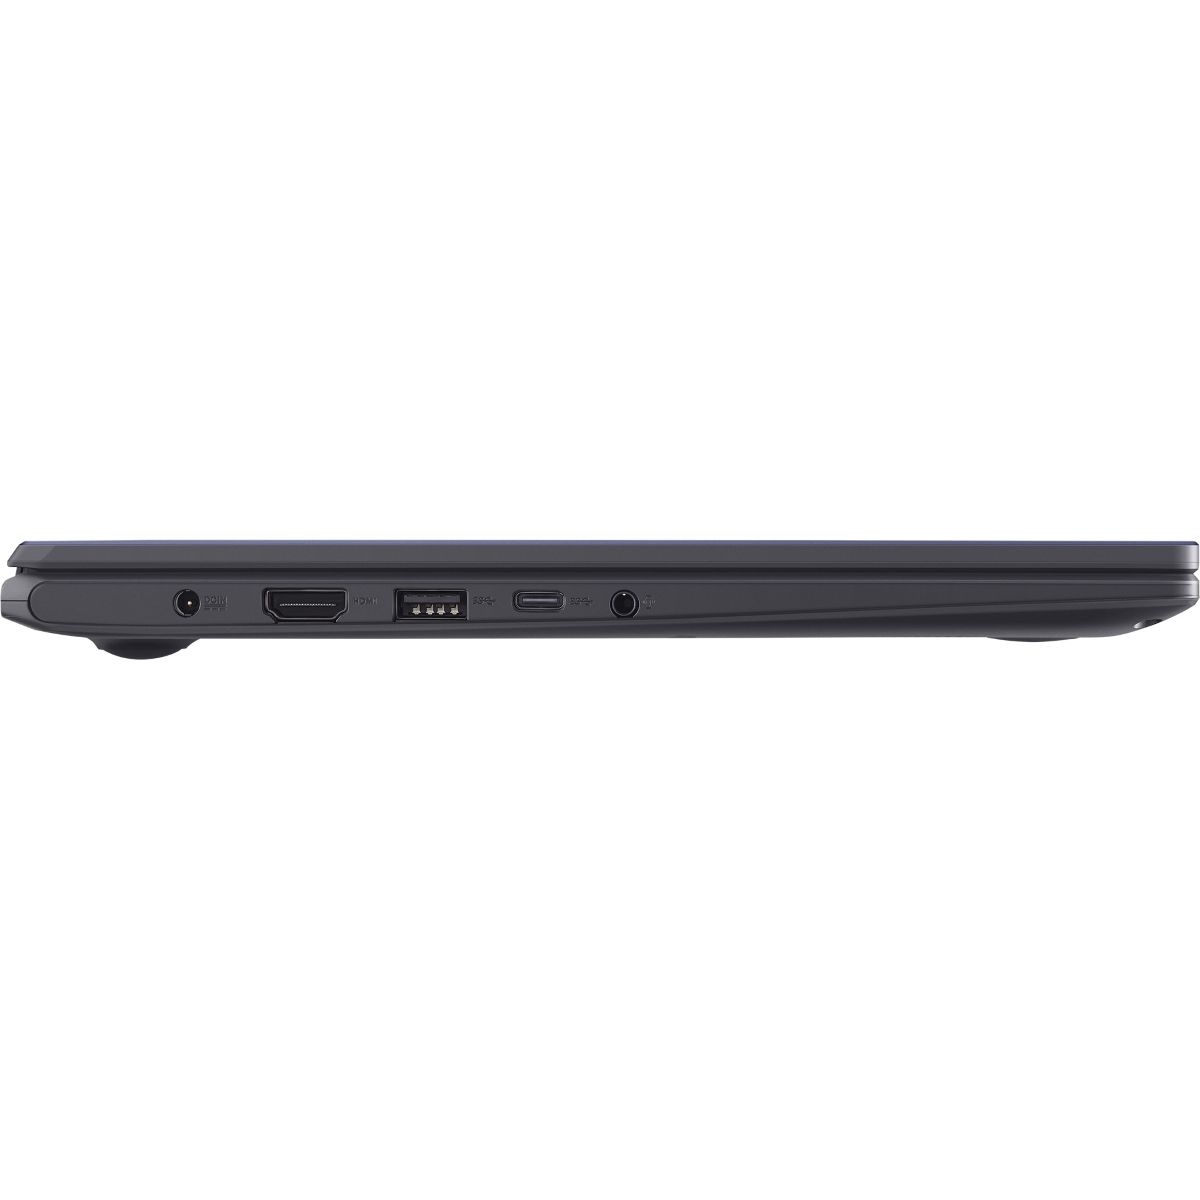 ASUS Laptop E410MA-EK1281WS 14" Intel Celeron N4020 4GB RAM 128GB eMMC